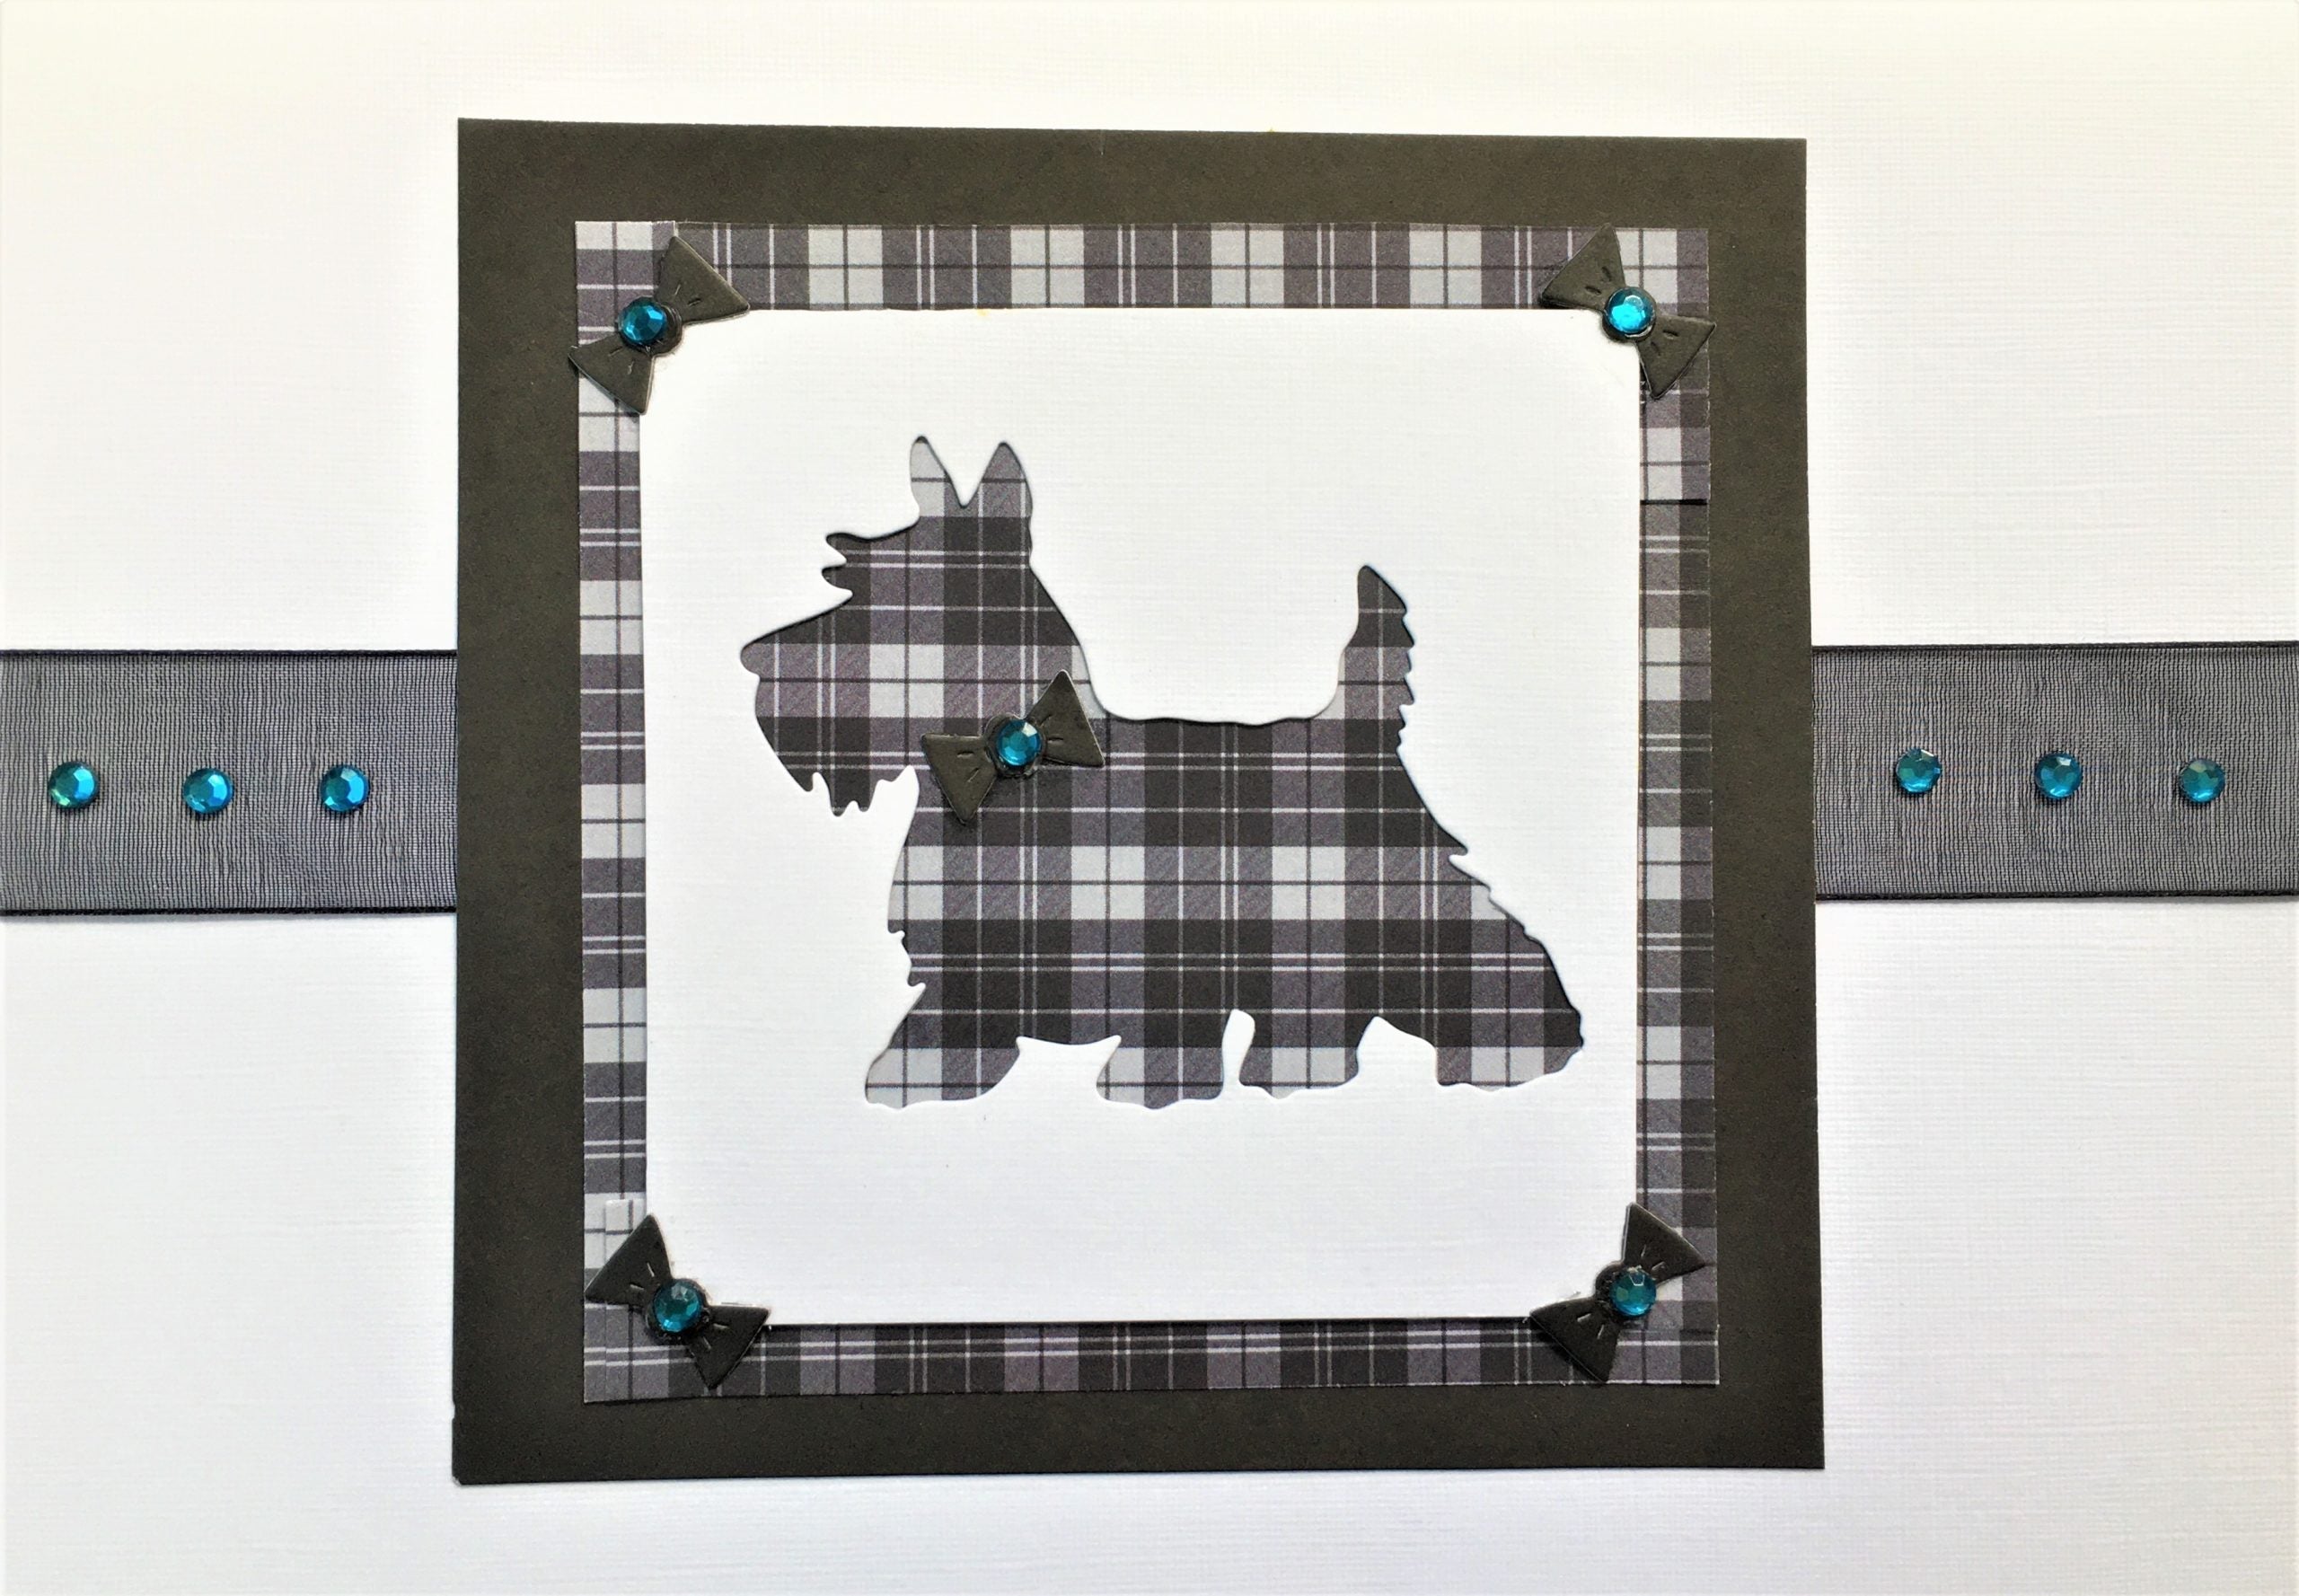 Black & White Tartan Scottie Dog Card | Roseneath Studios | Scottish Creations